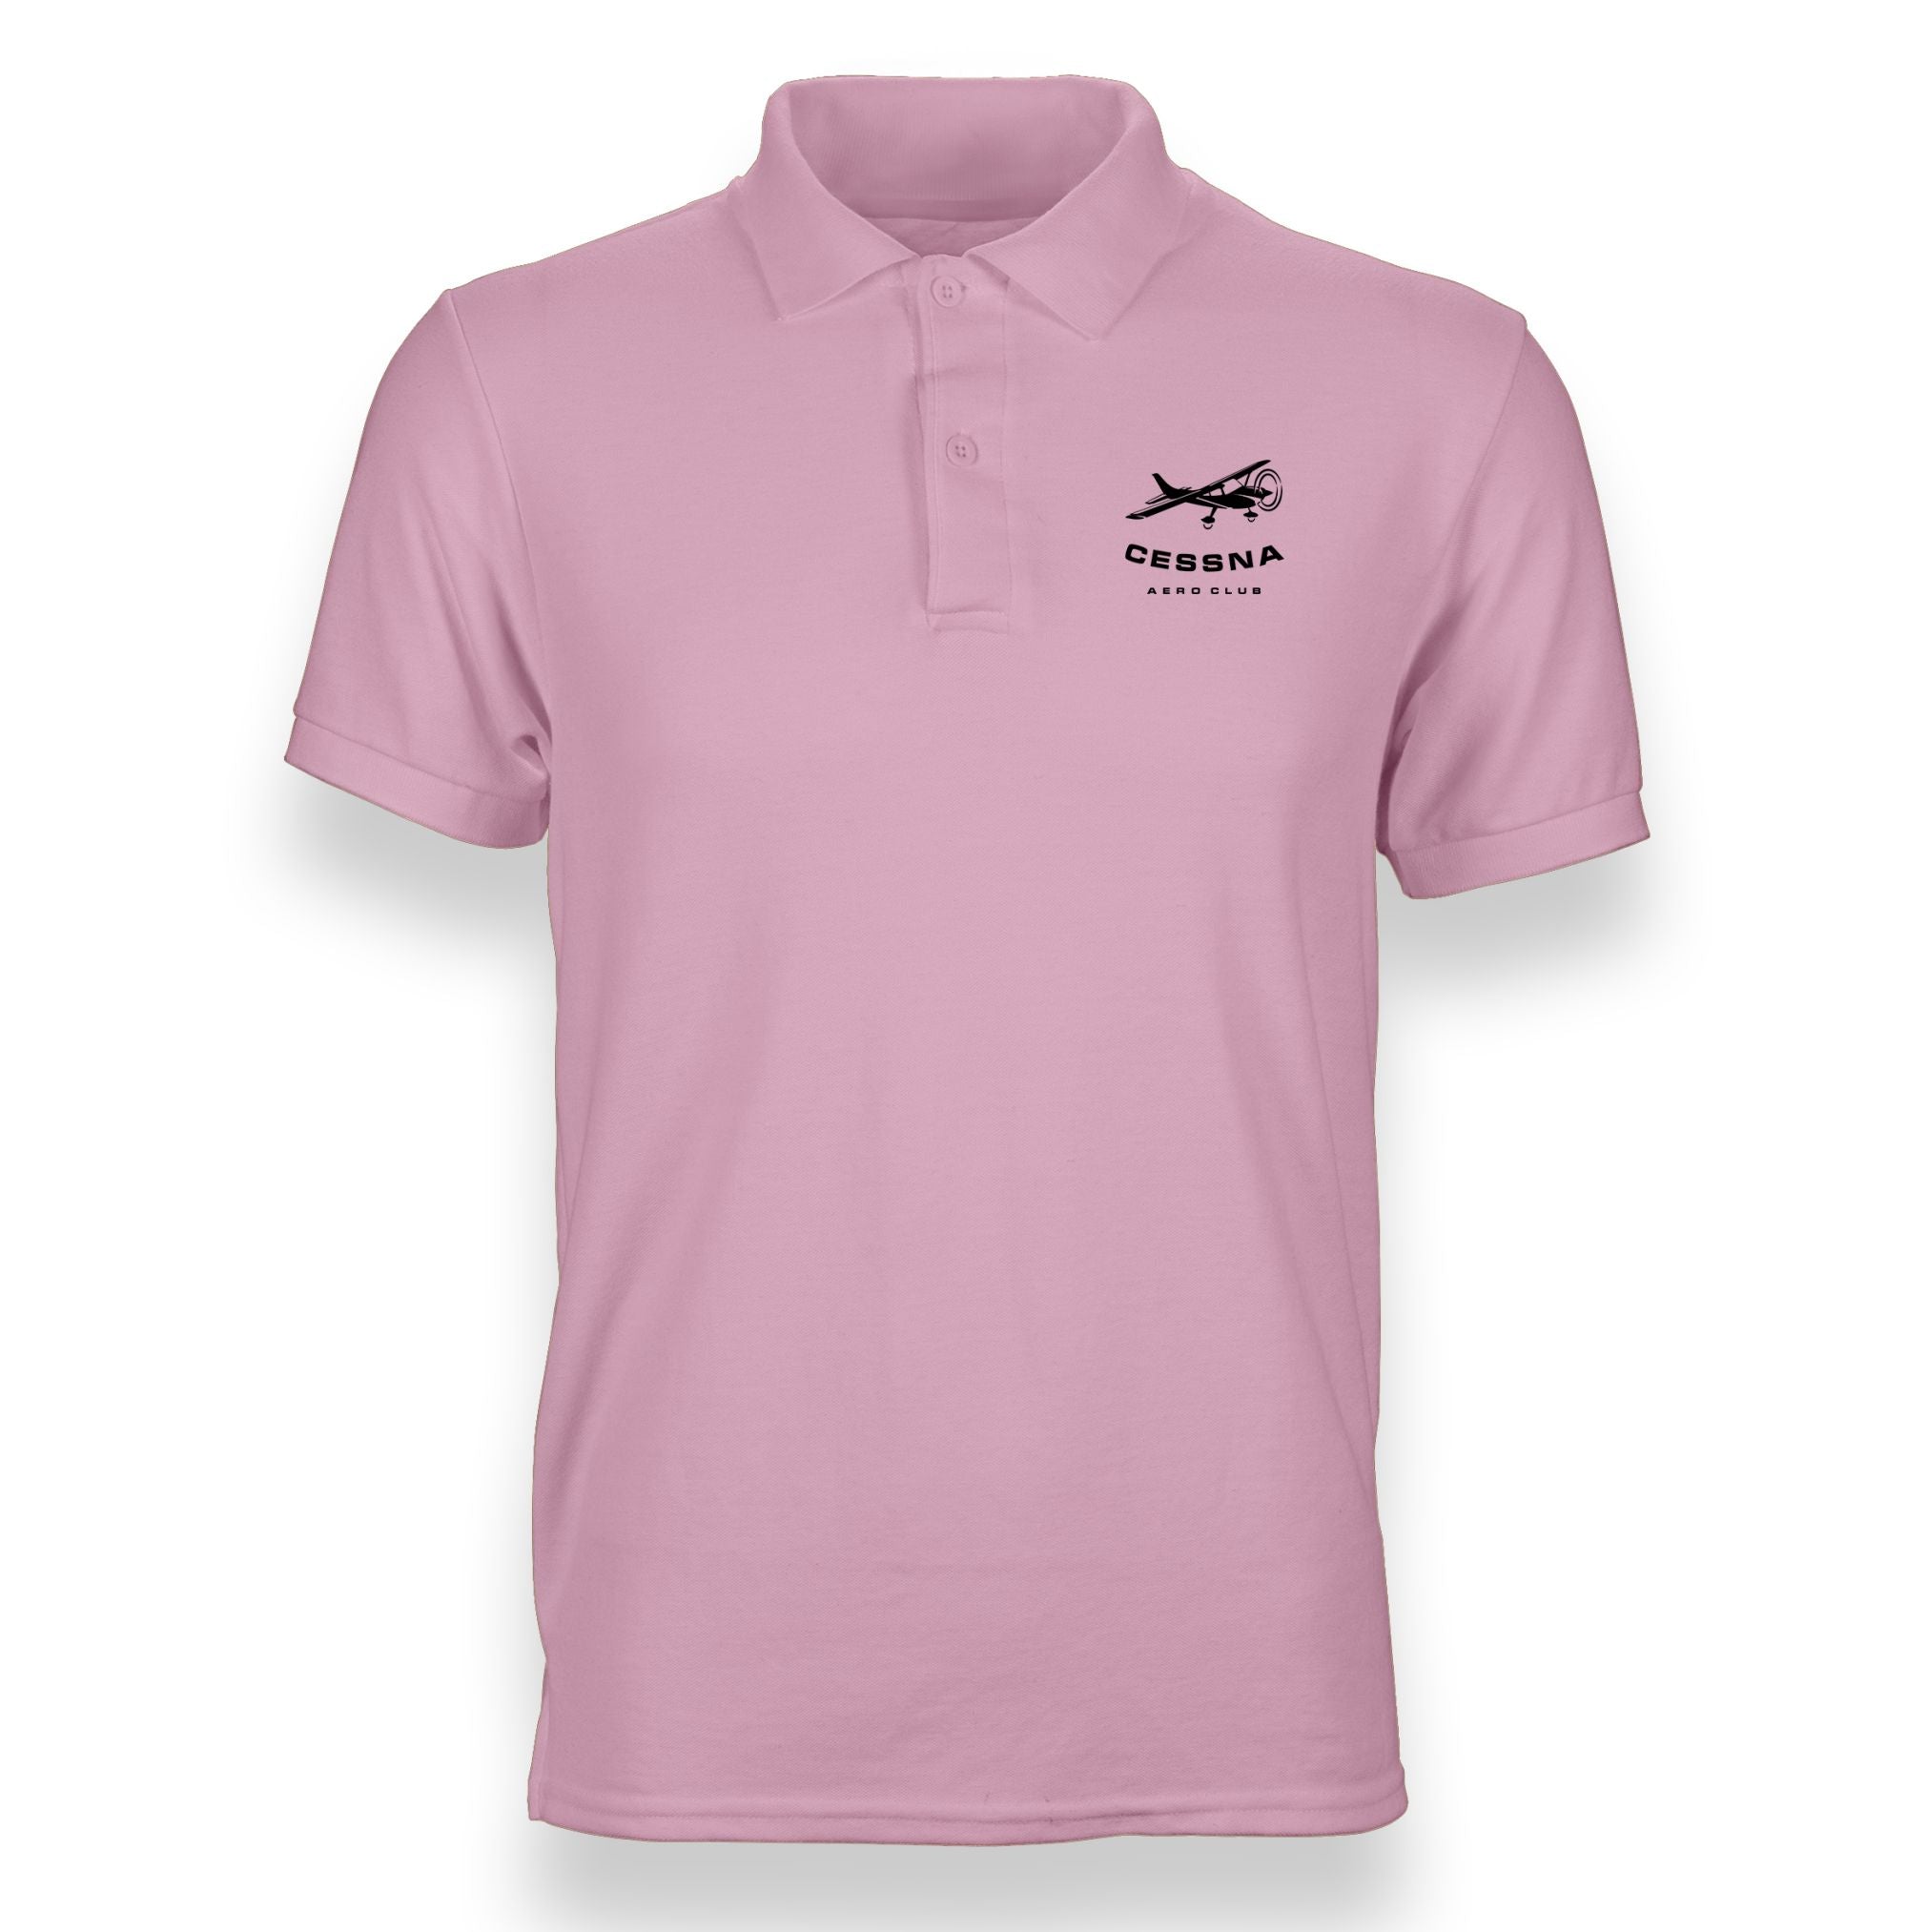 Cessna Aeroclub Designed "WOMEN" Polo T-Shirts